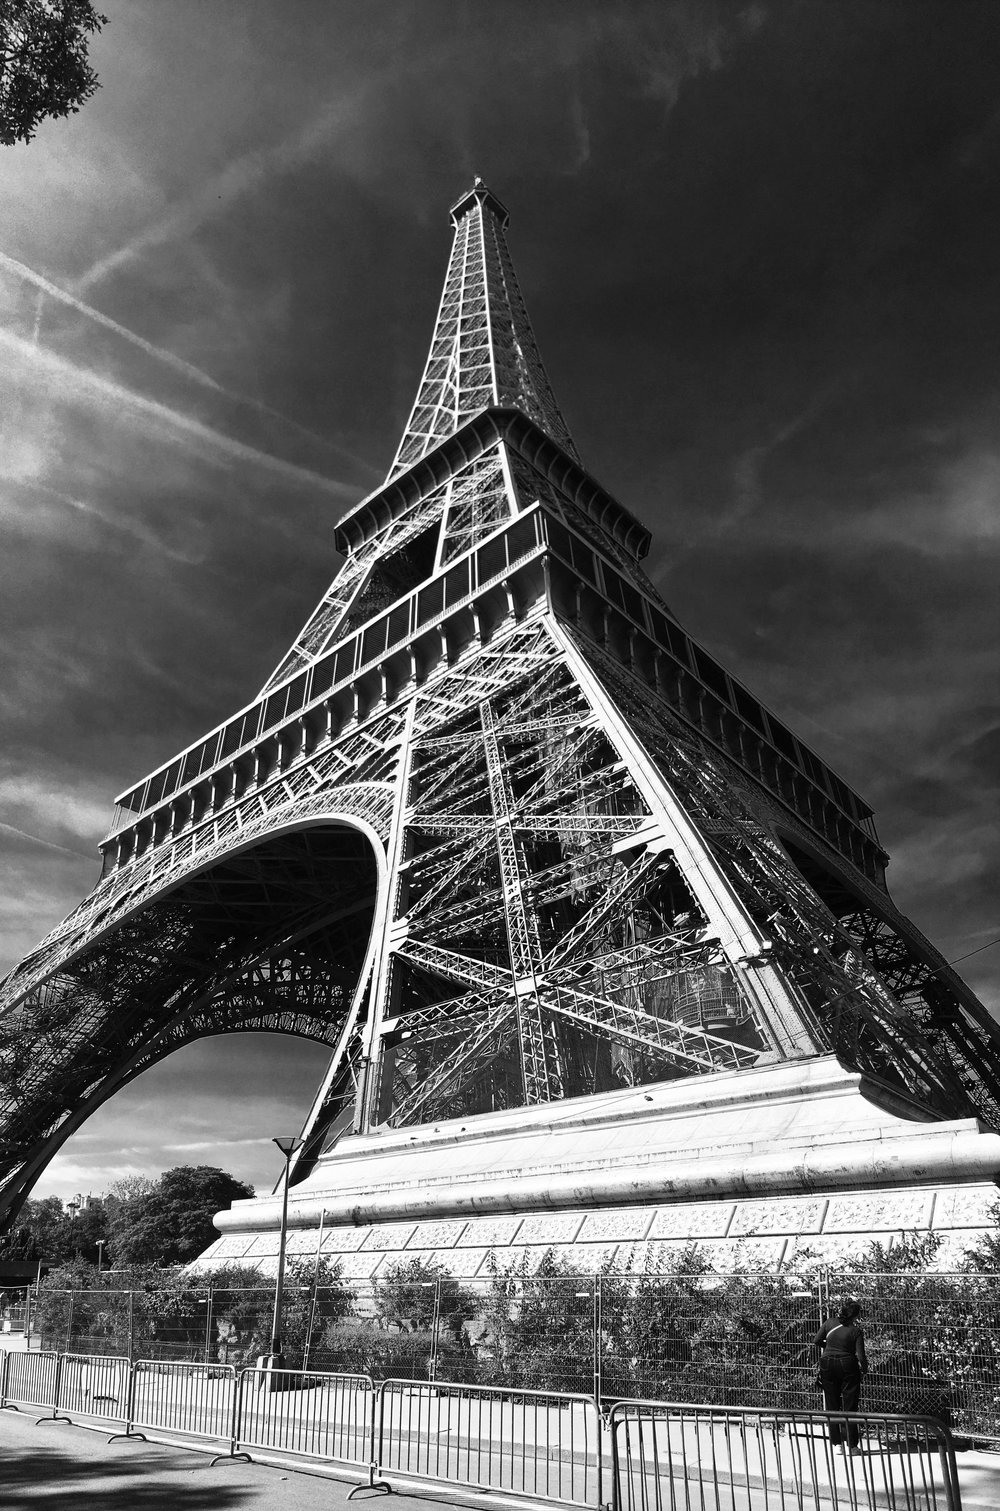 Tom_Oliver_Payne_London_to_Paris_Cycle-29.jpg